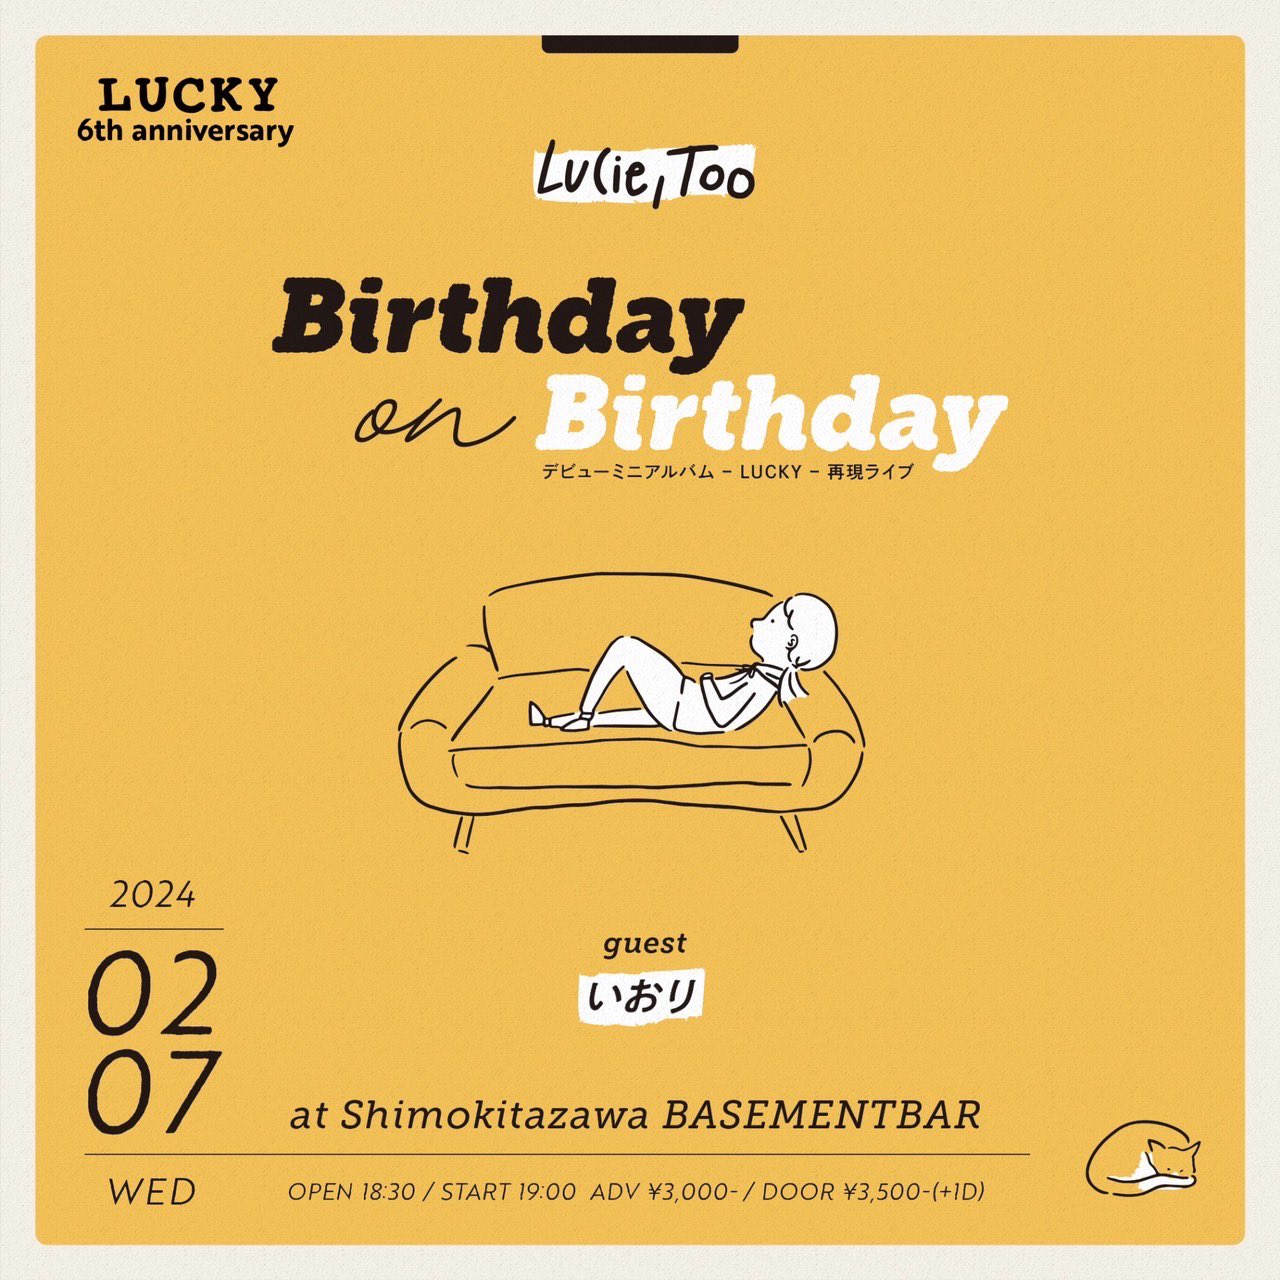 Lucie,Too  Birthday on Birthday  LUCKY 6th anniversary  デビューミニアルバム『LUCKY』再現ライブ